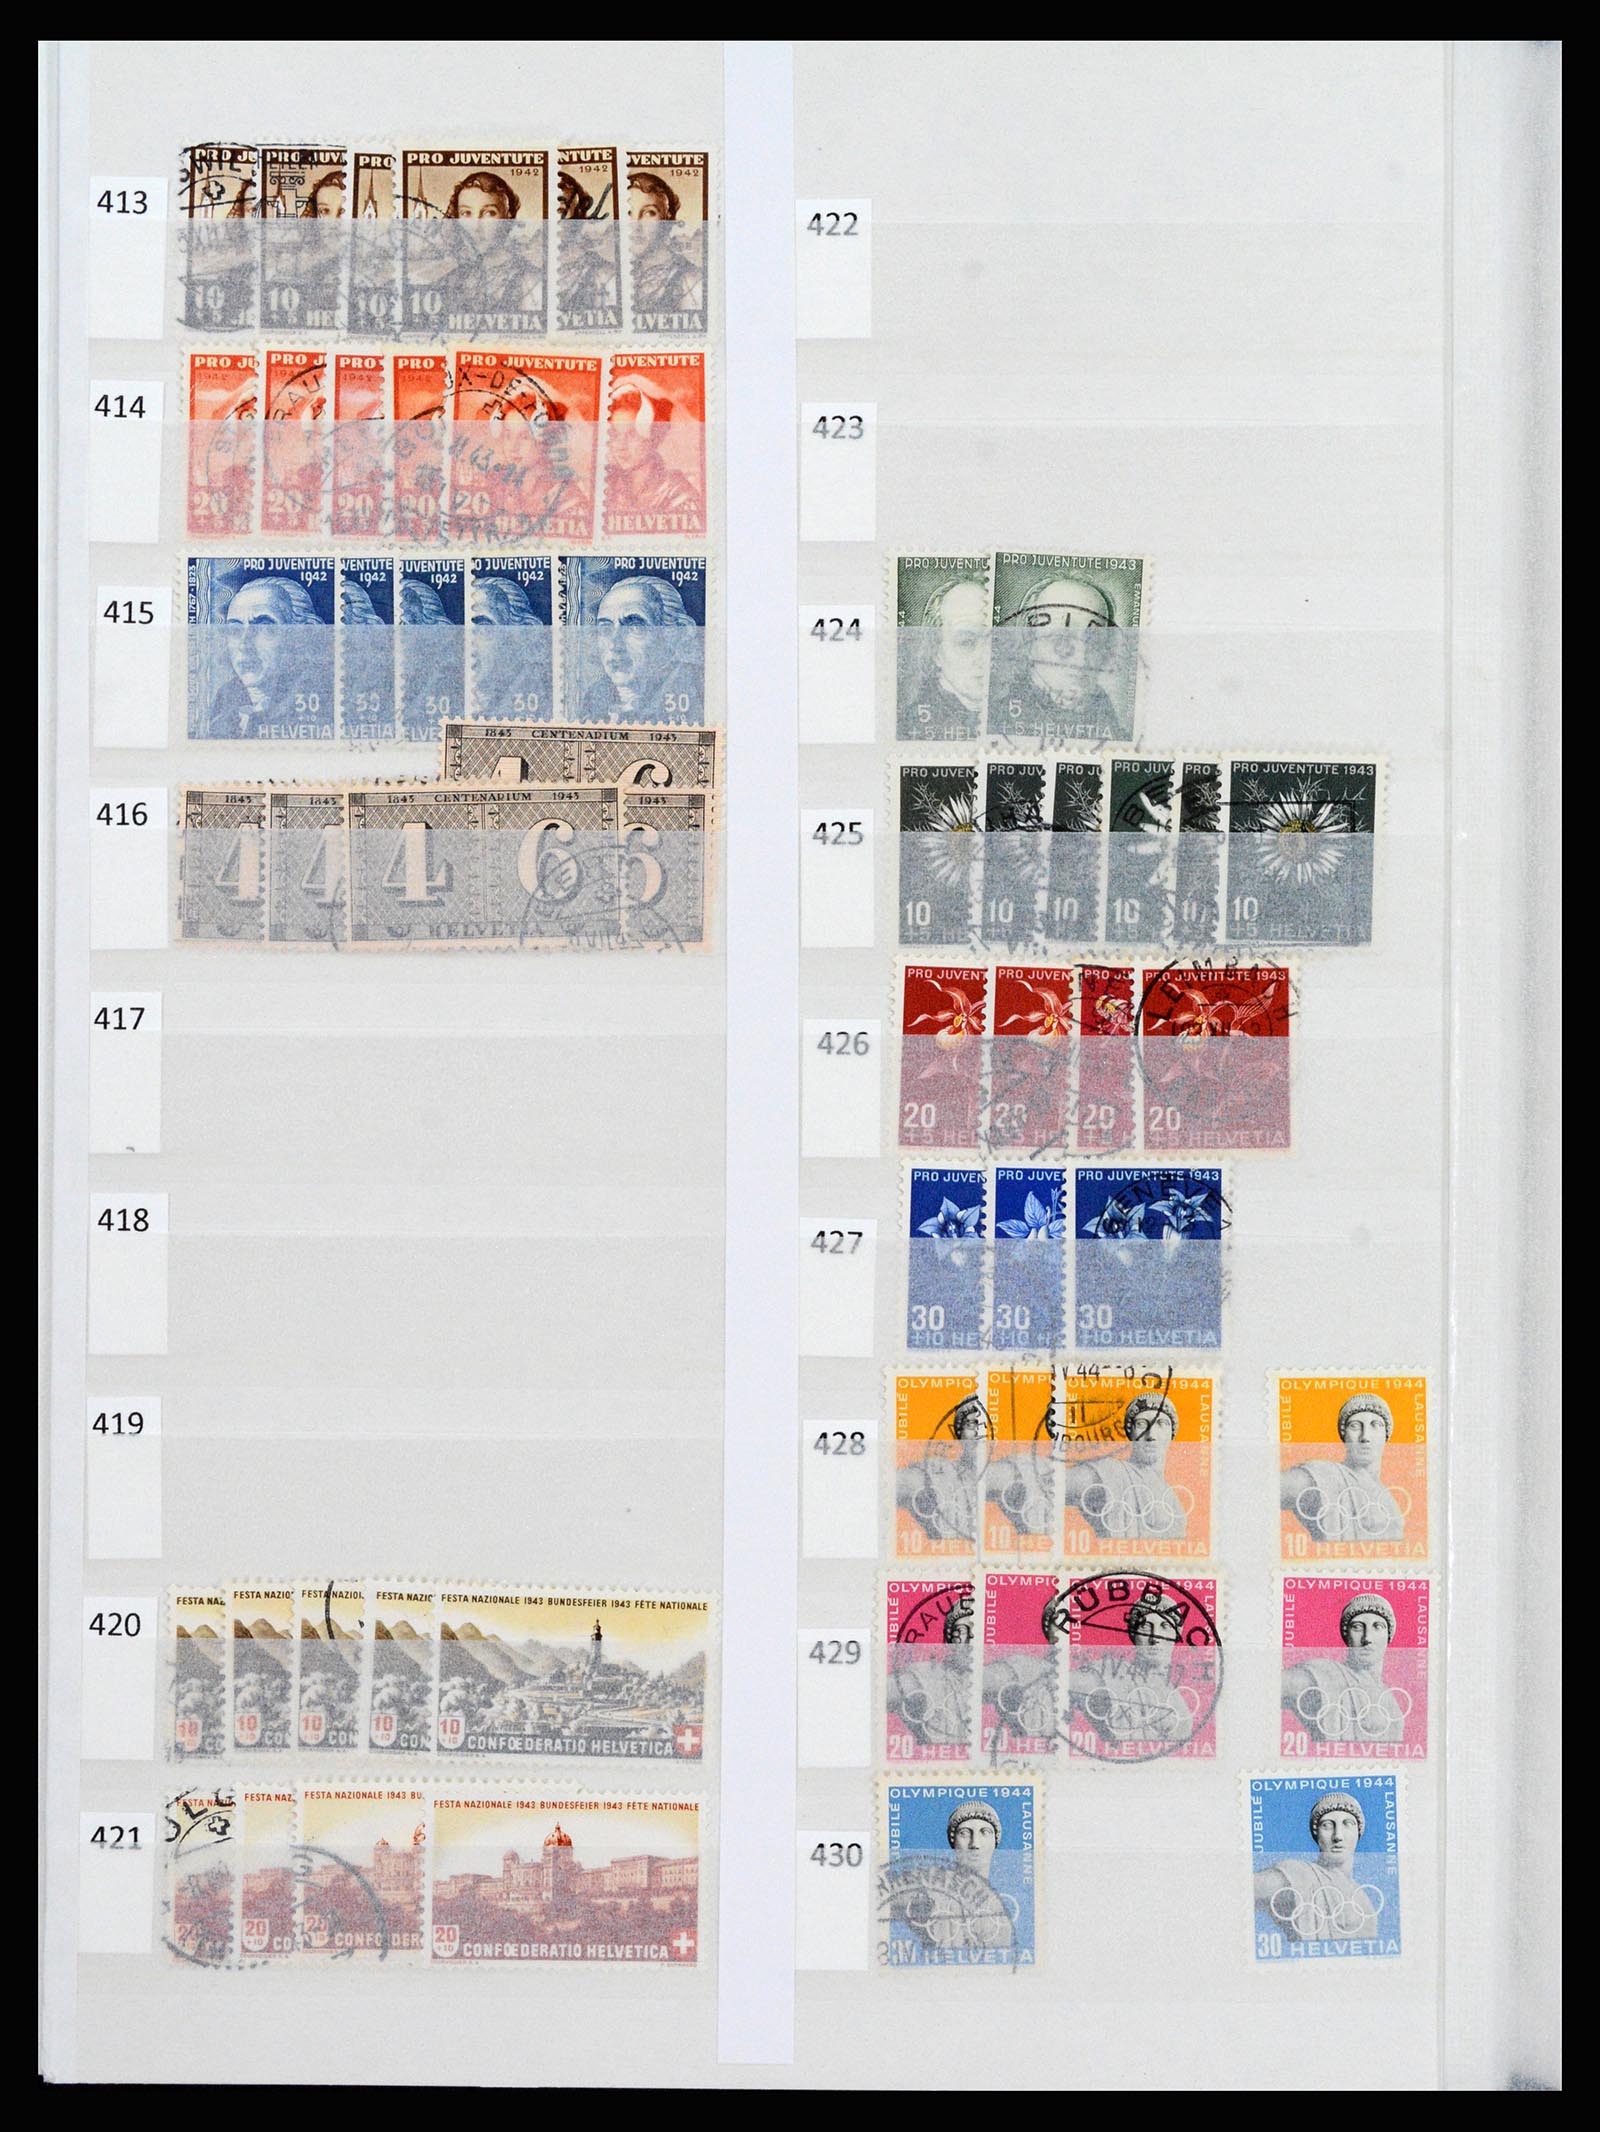 37252 020 - Stamp collection 37252 Switzerland 1900-2011.